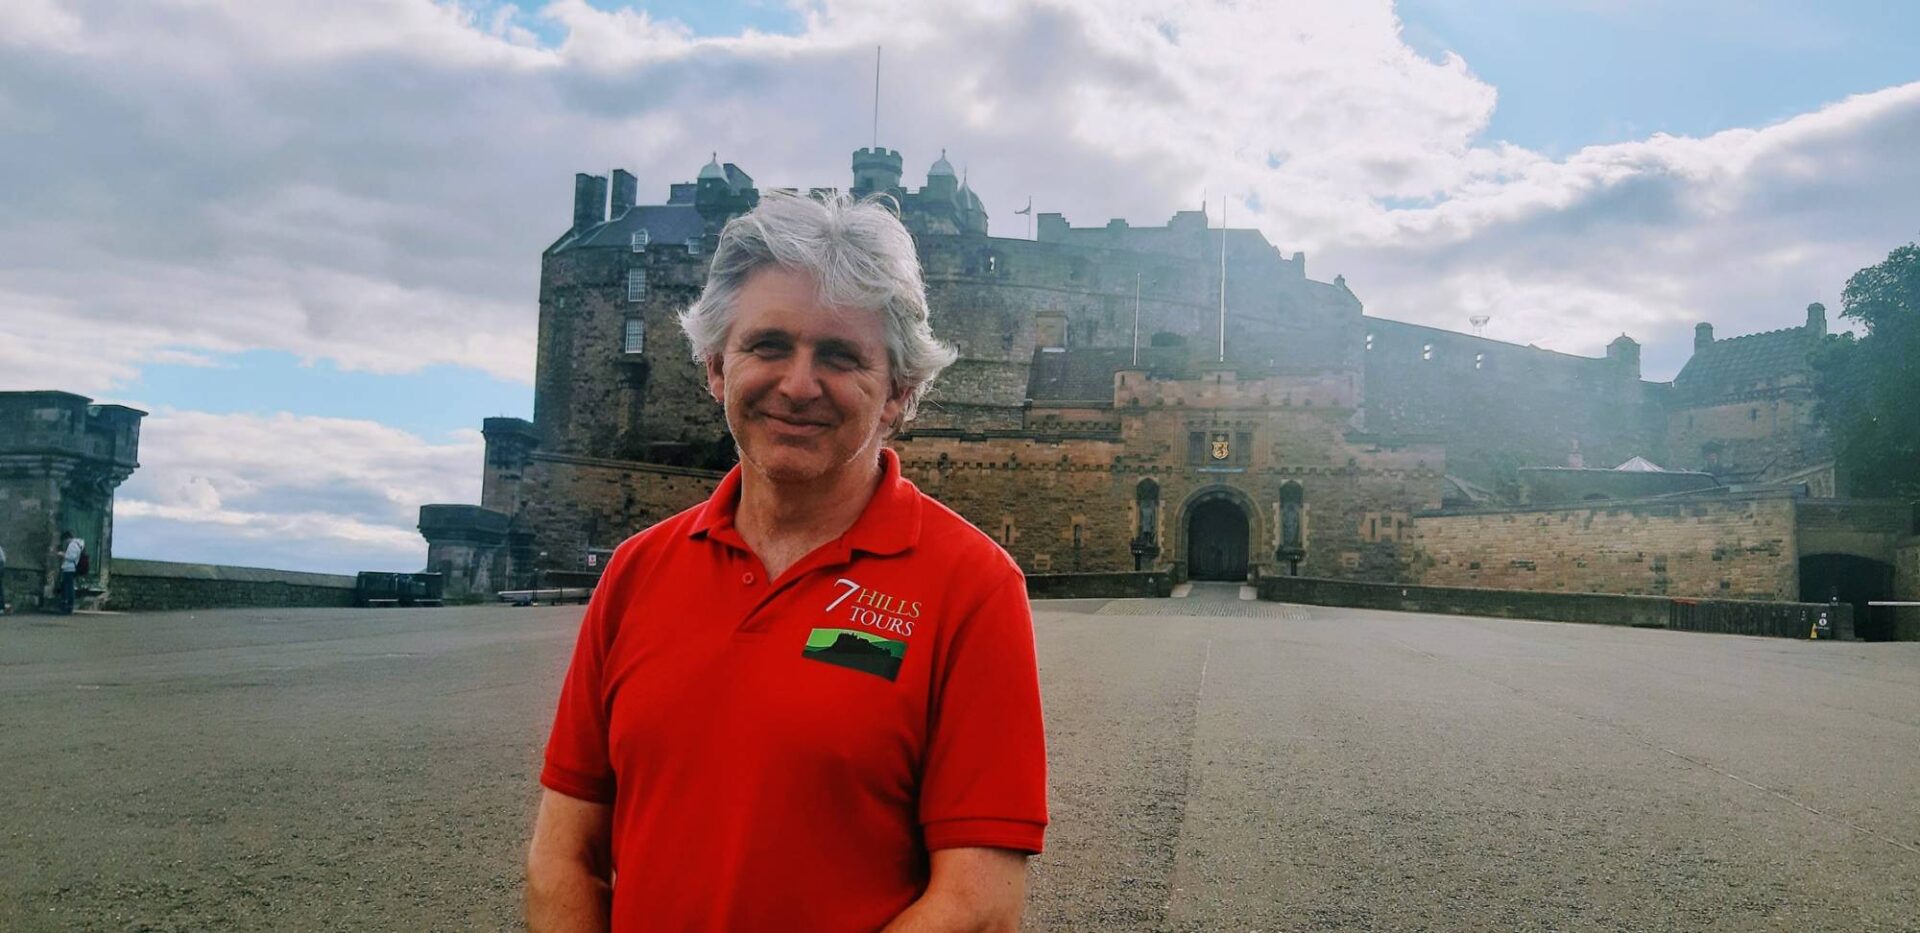 Dr Moray Grigor of 7 Hills Tours Ltd, in front of Edinburgh Castle, Moray Grigor